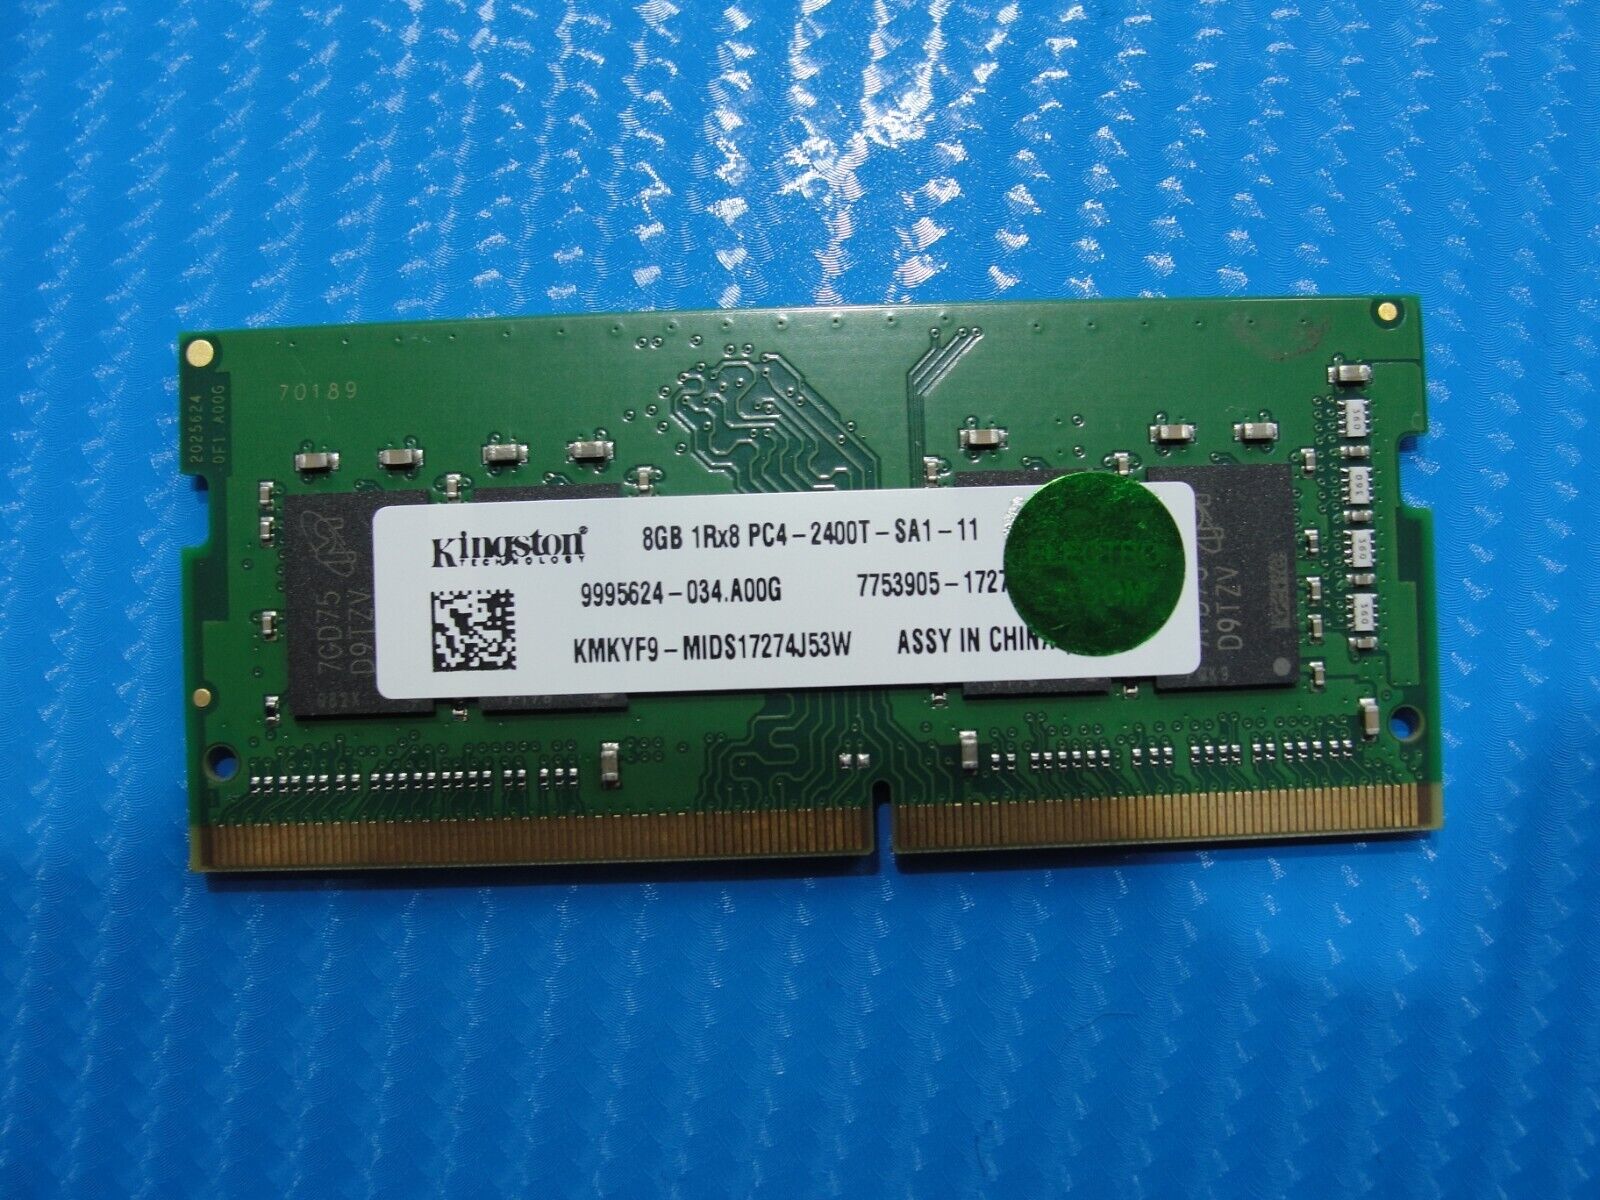 Dell 5580 Kingston 8Gb 1Rx8 Memory RAM So-Dimm PC4-2400T KMKYF9-MIDS